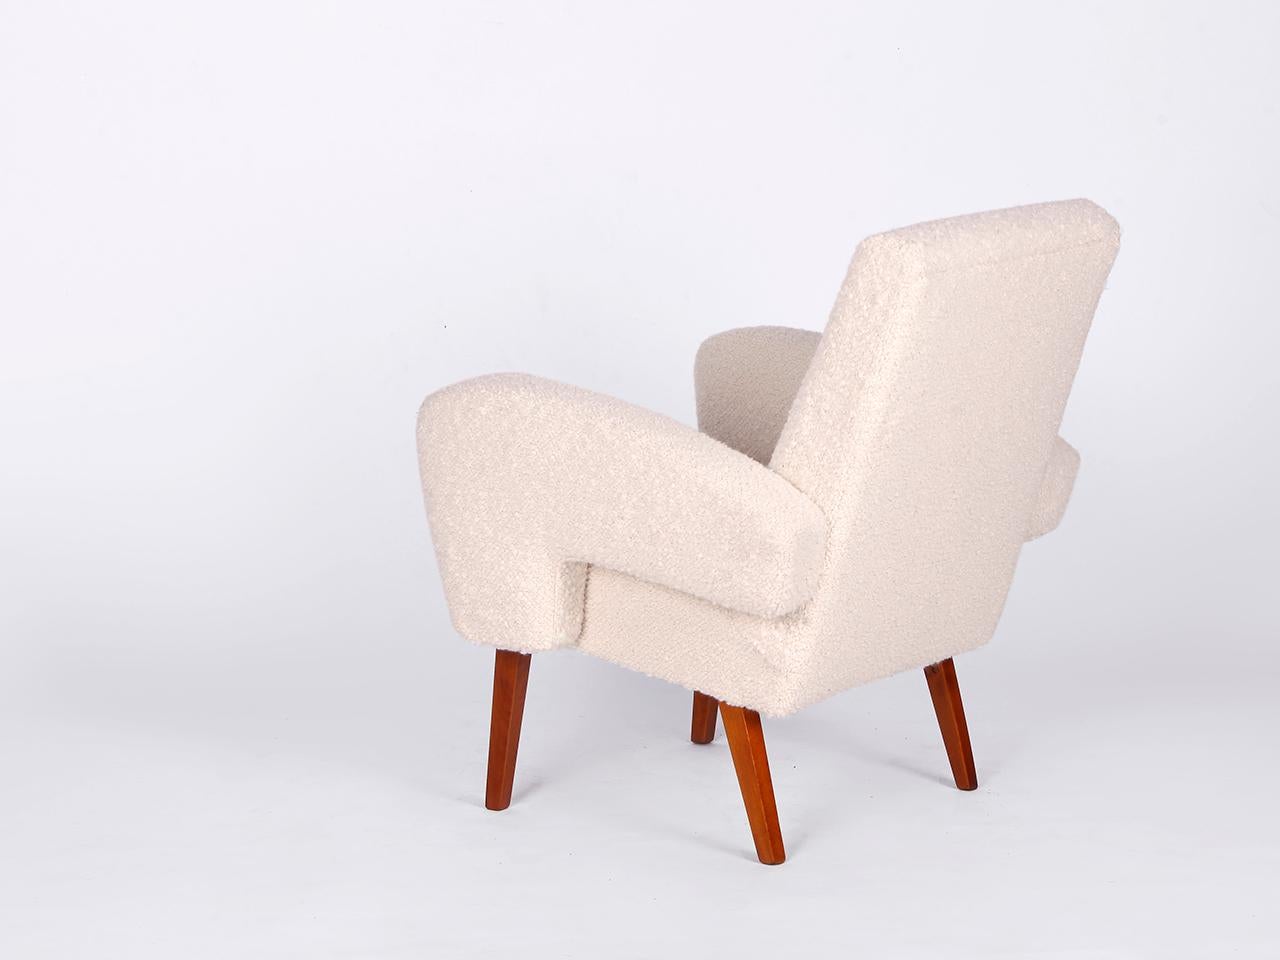 Mid-Century-Bouclé-Sessel für Jitona, 1960er Jahre (20. Jahrhundert) im Angebot